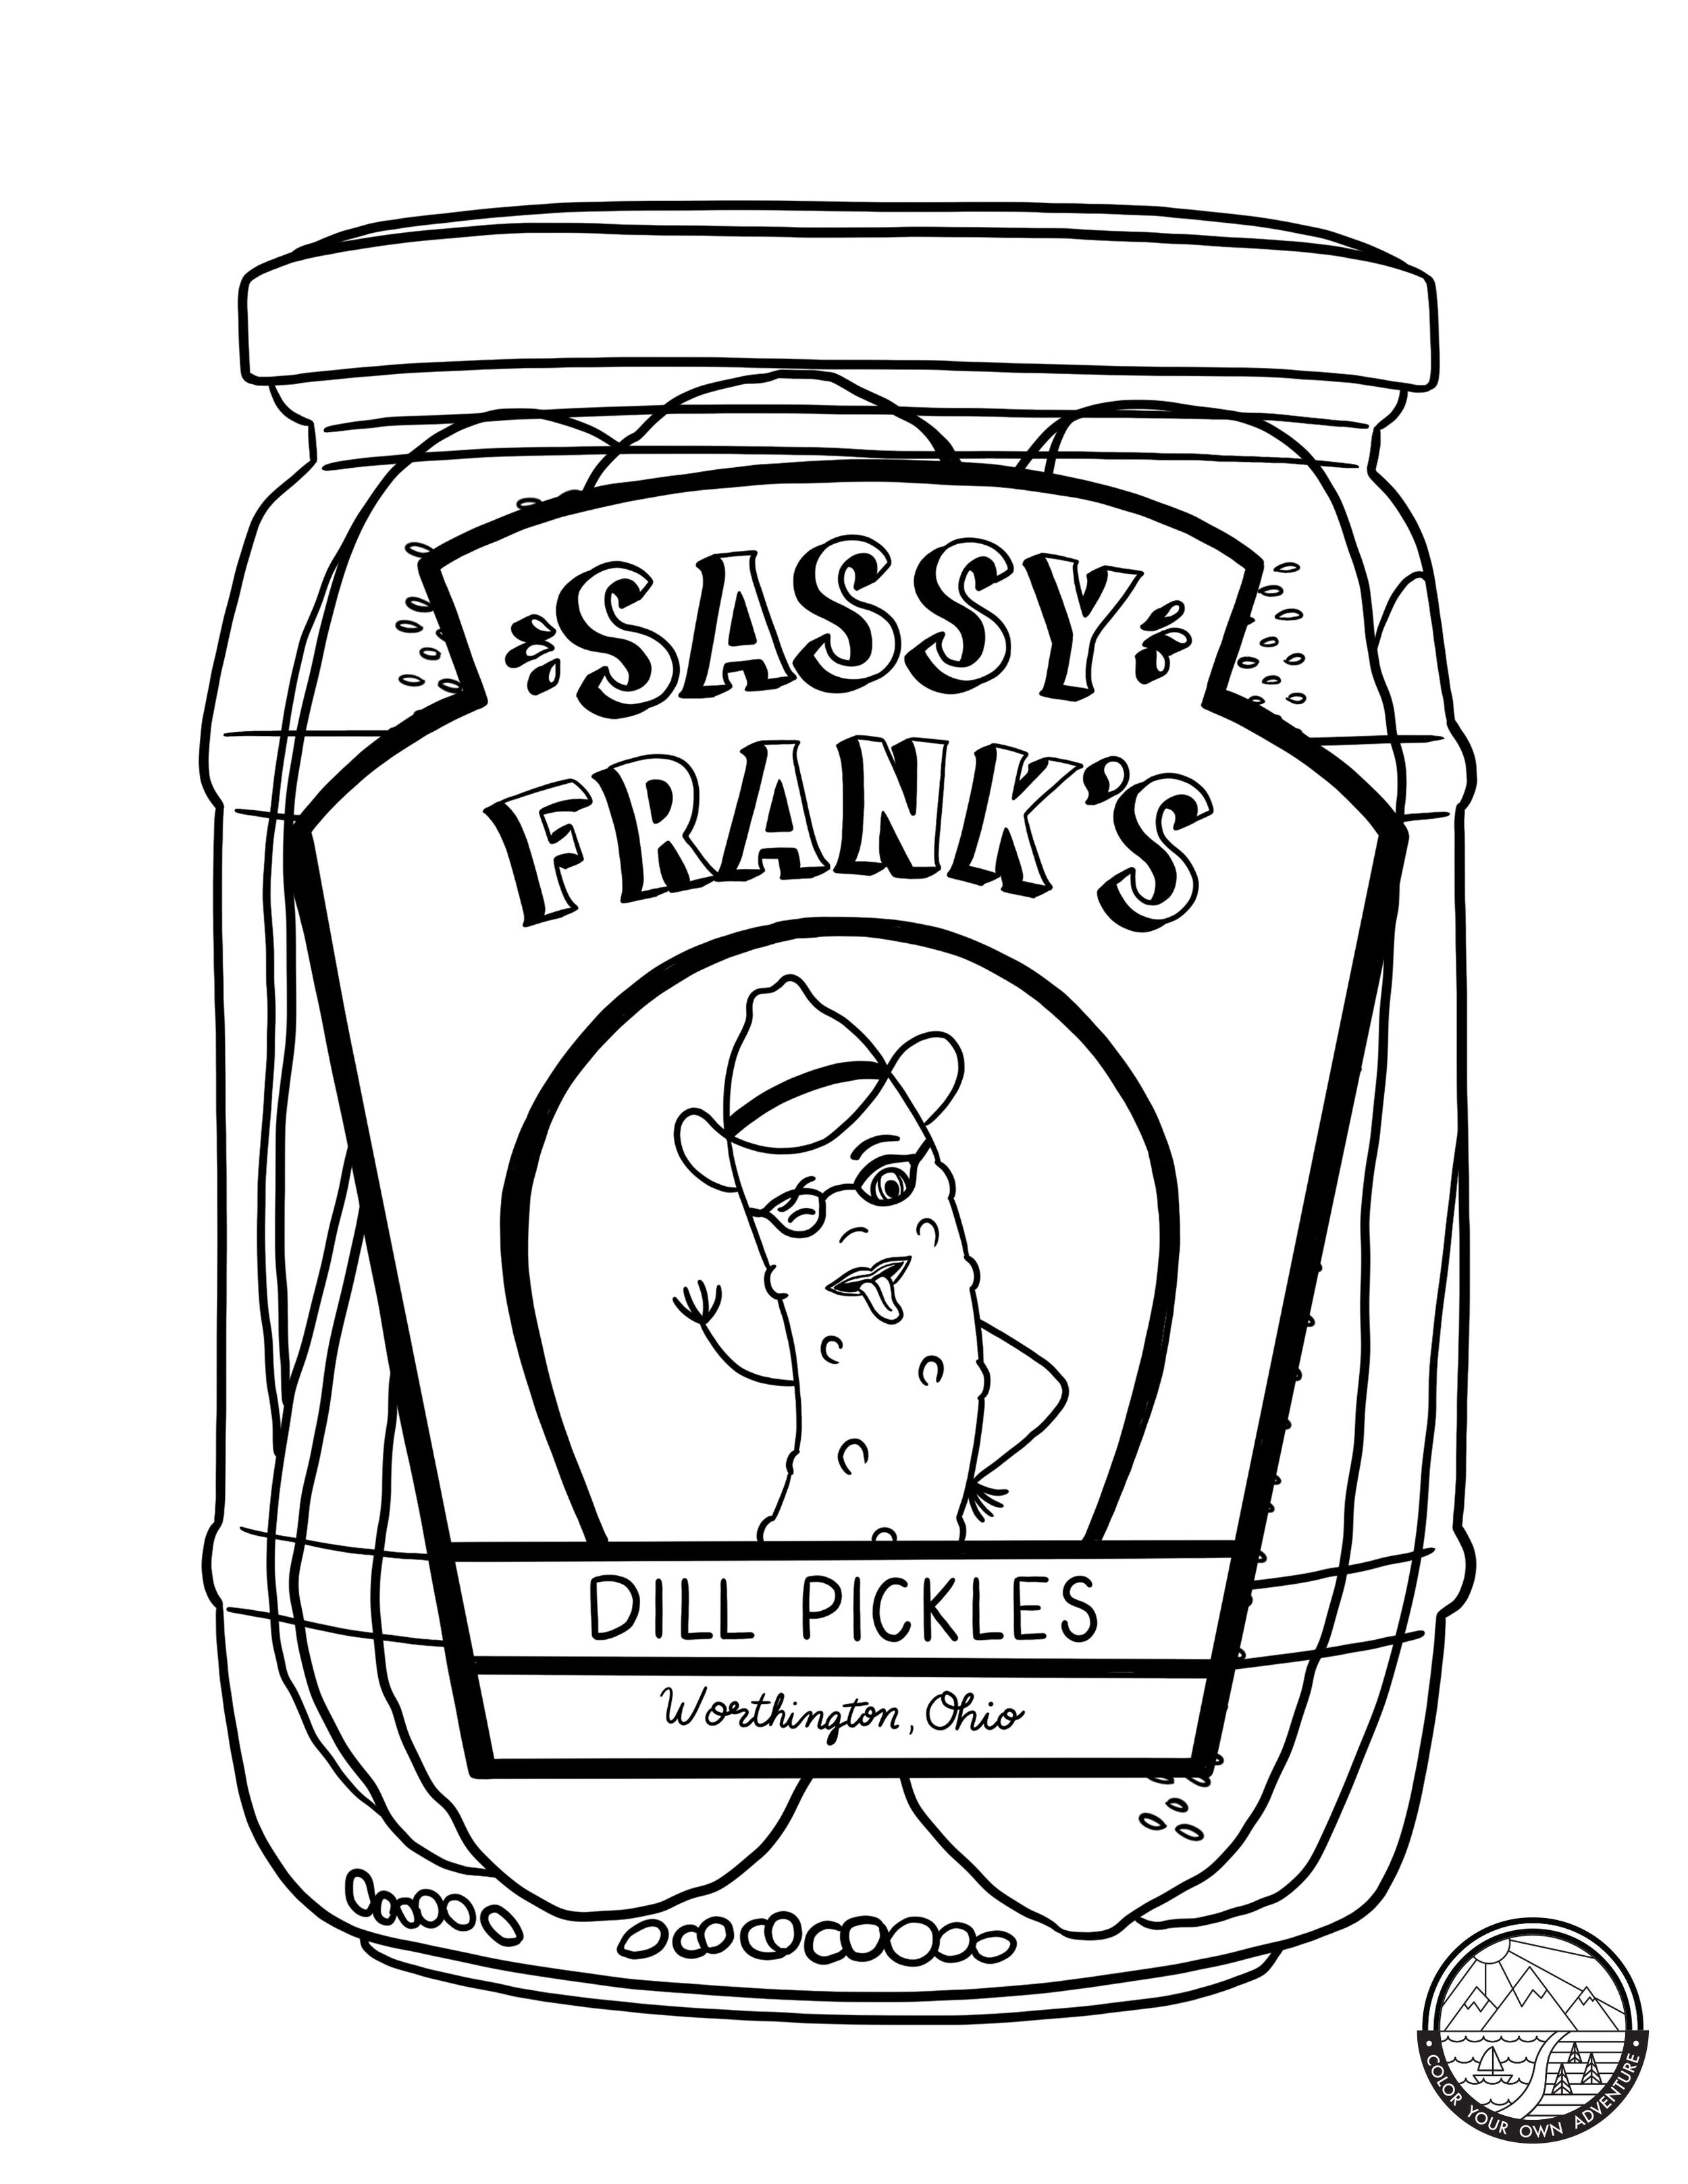 Pickle Jar Coloring Page